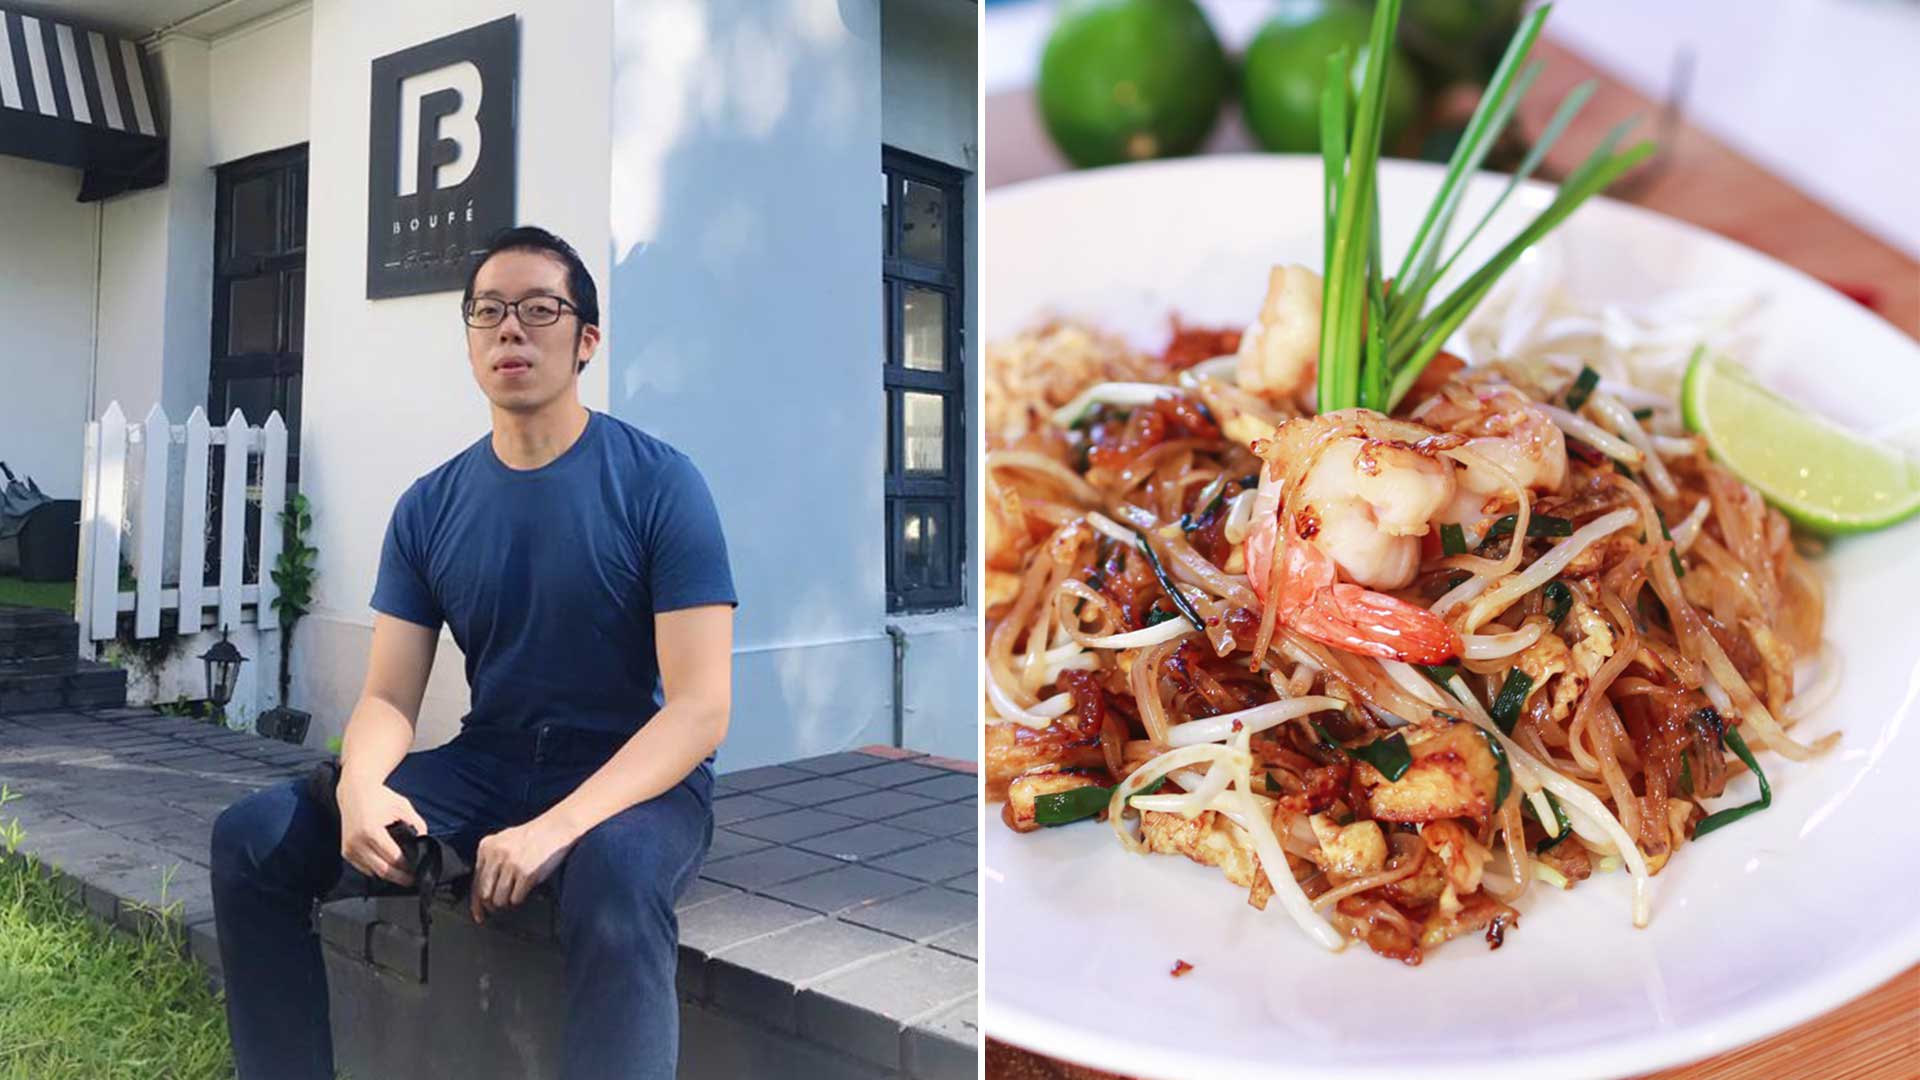 Ex-Waku Ghin Chef Sells Thai Food Like $8.50 Pad Thai For Circuit Breaker